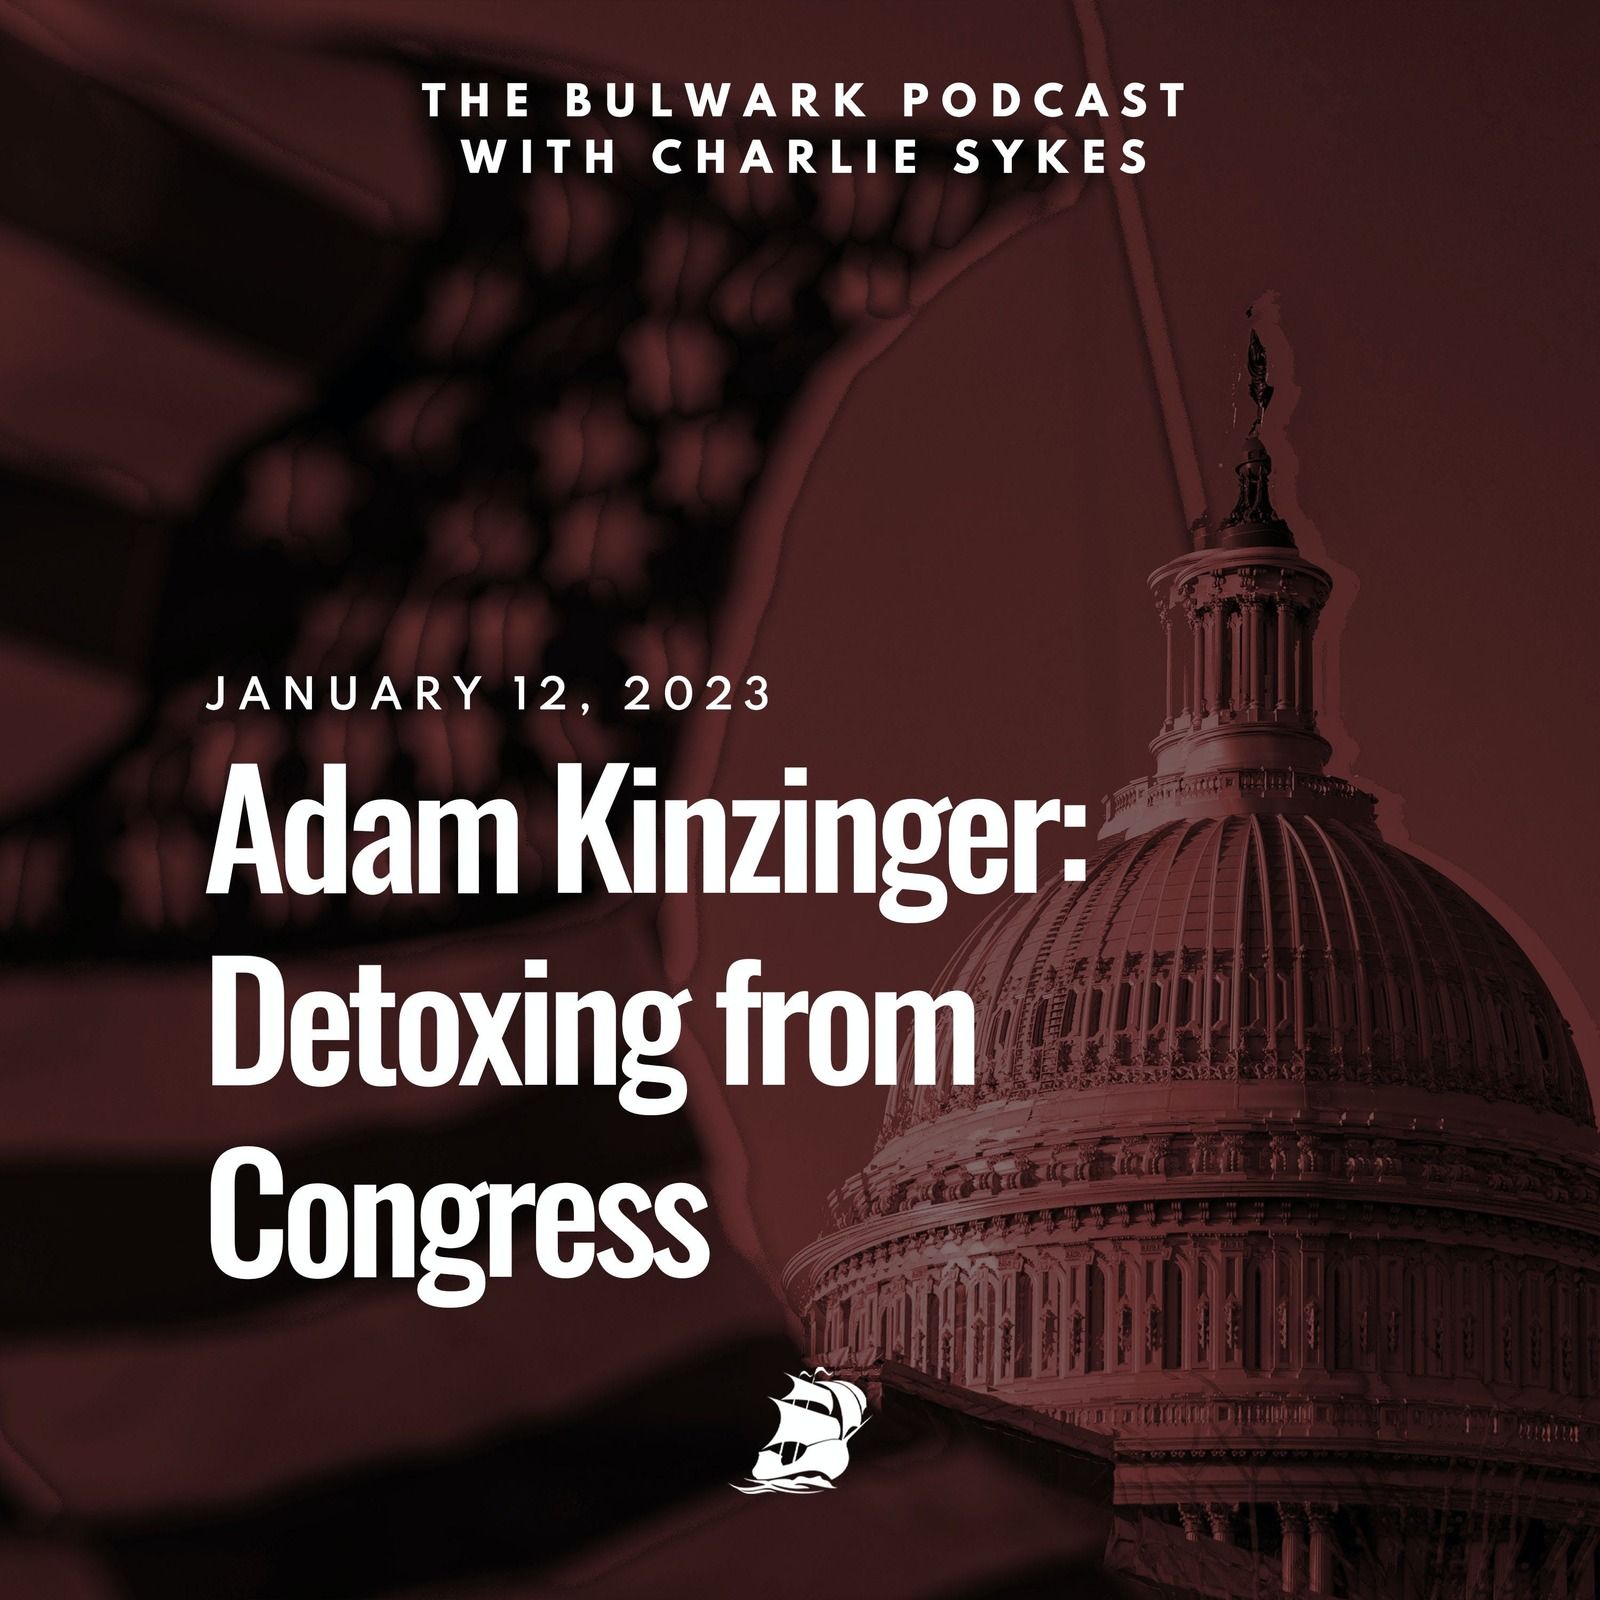 Adam Kinzinger: Detoxing from Congress